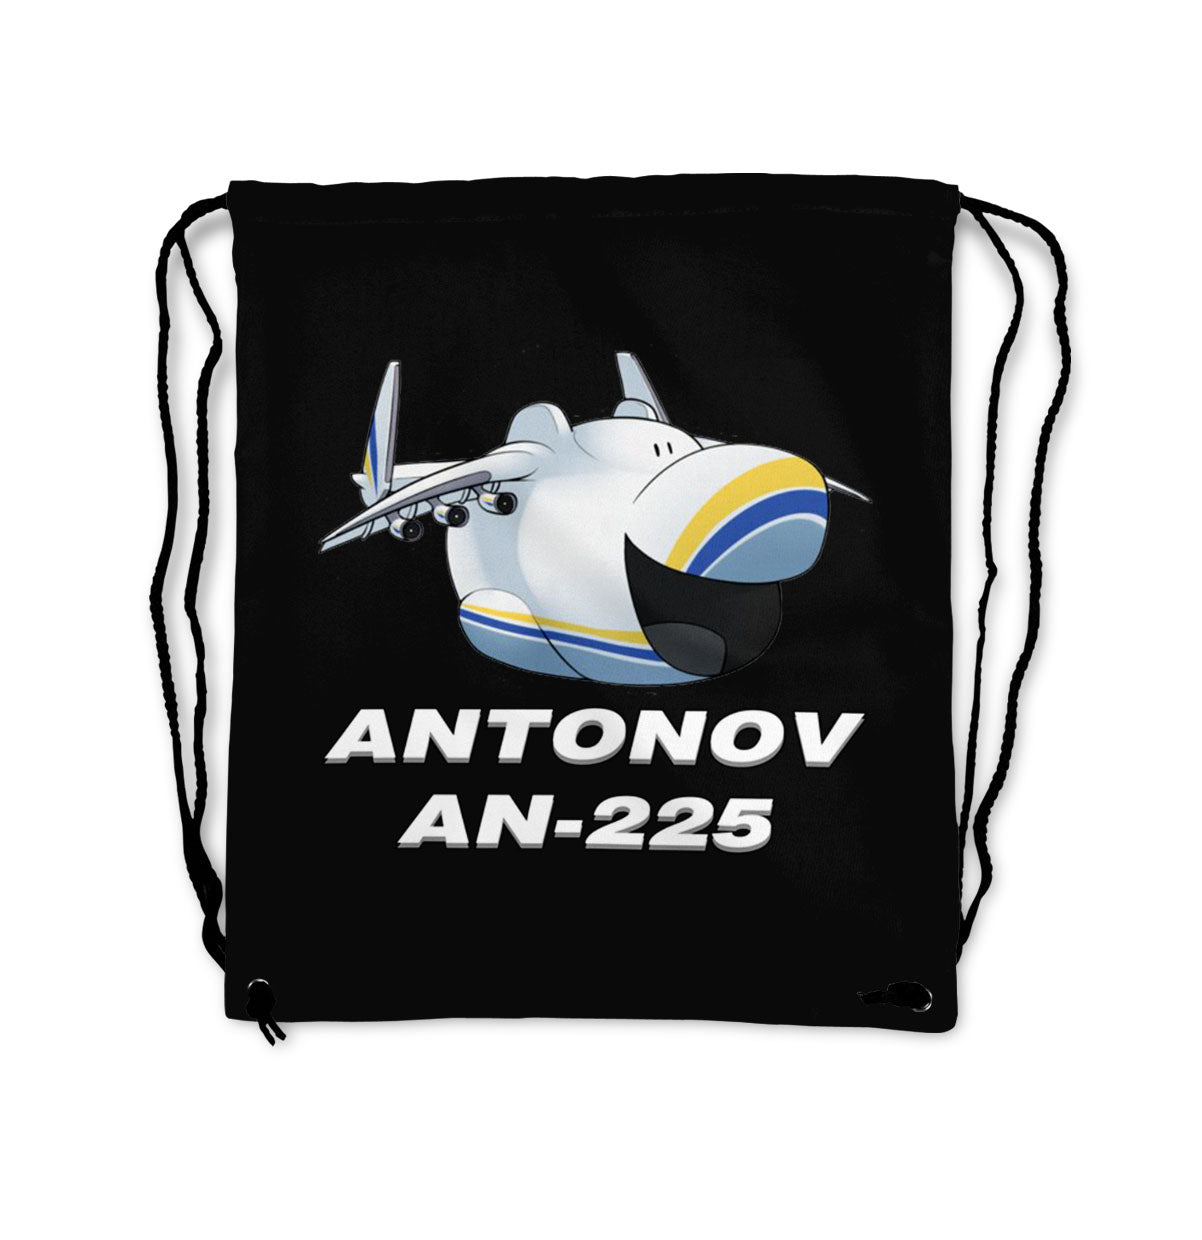 Antonov AN-225 (23) Designed Drawstring Bags